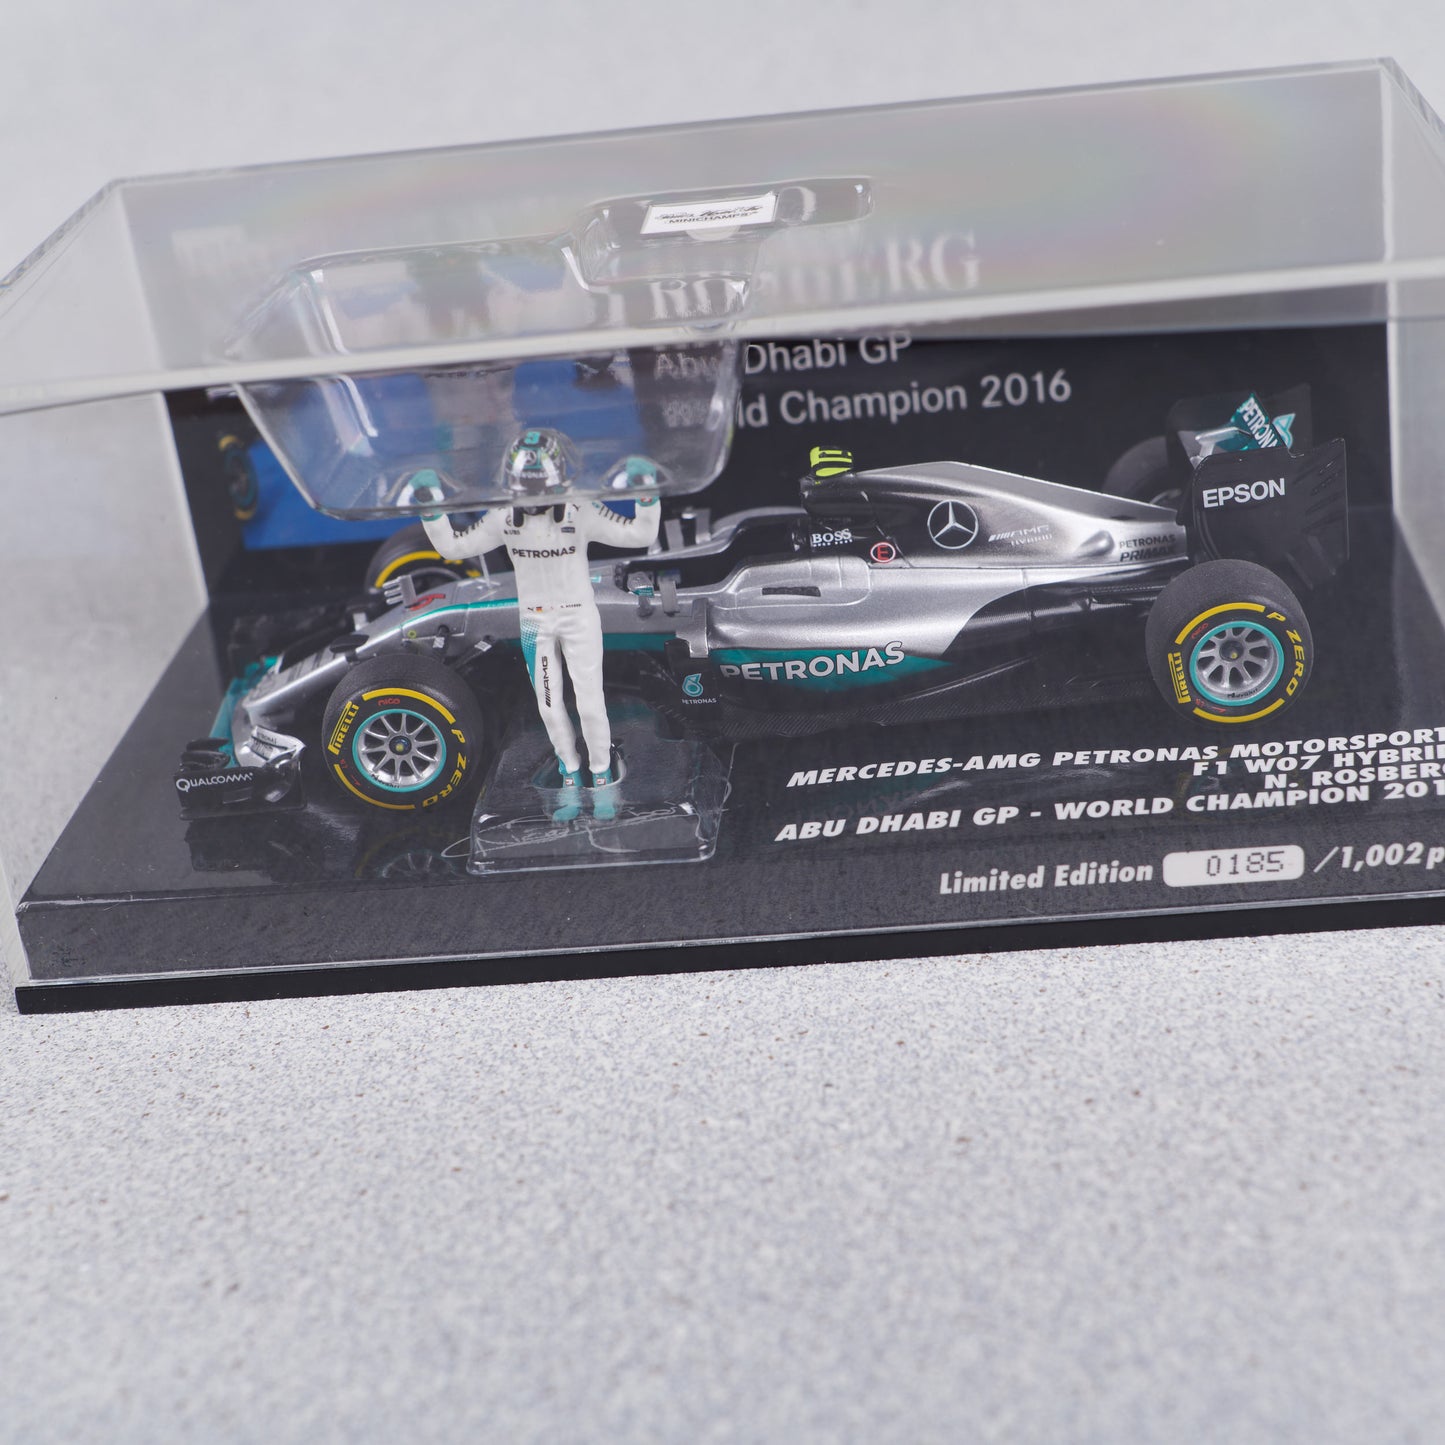 Mercedes AMG Petronas Motorsport - Nico Rosberg, 1:43